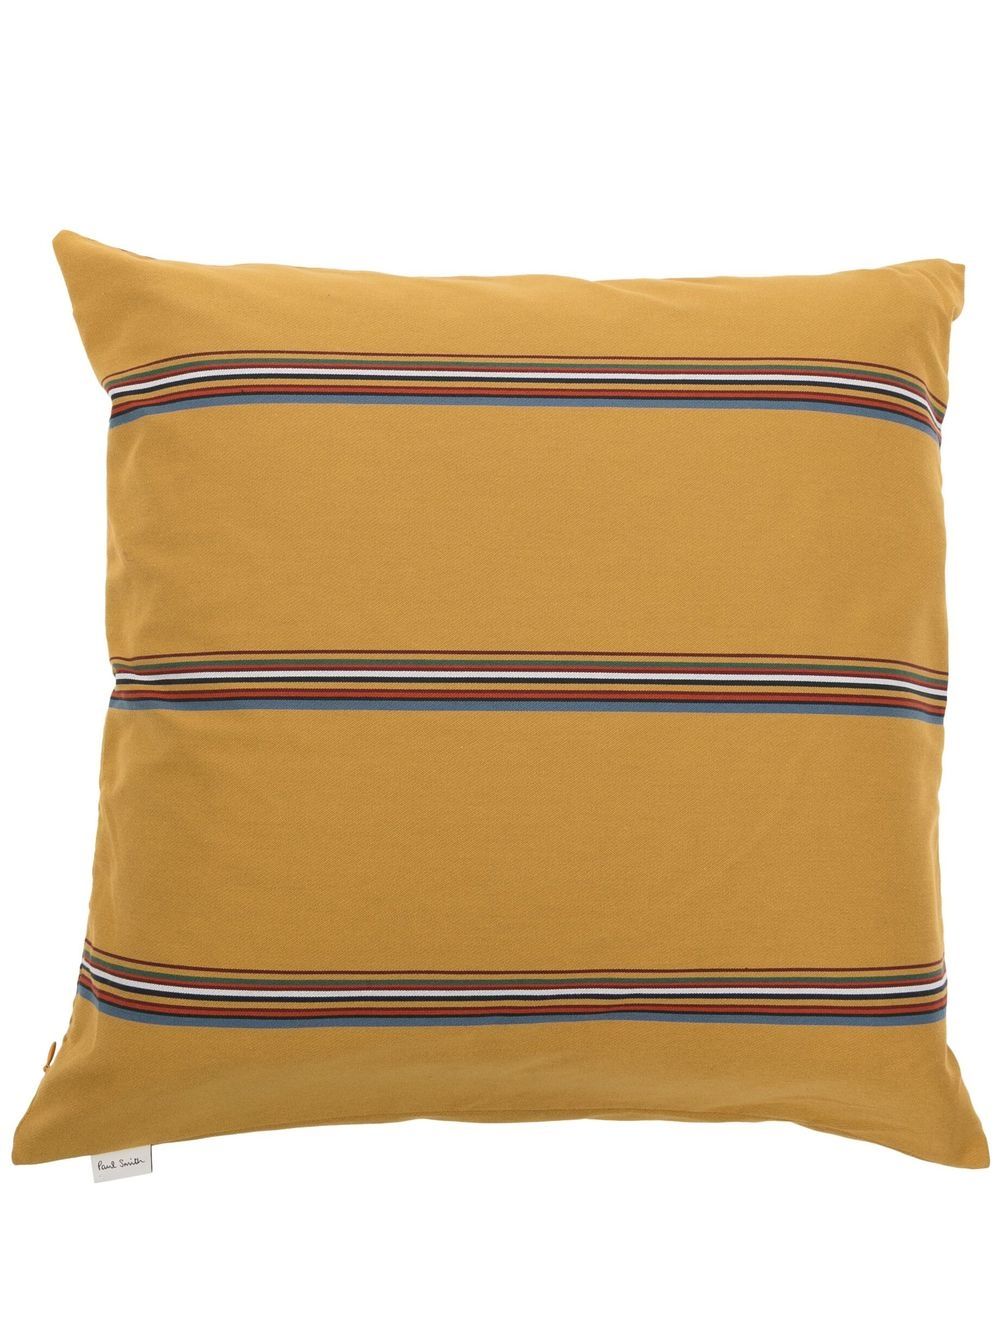 Paul Smith Signature Stripe Cushion In Yellow